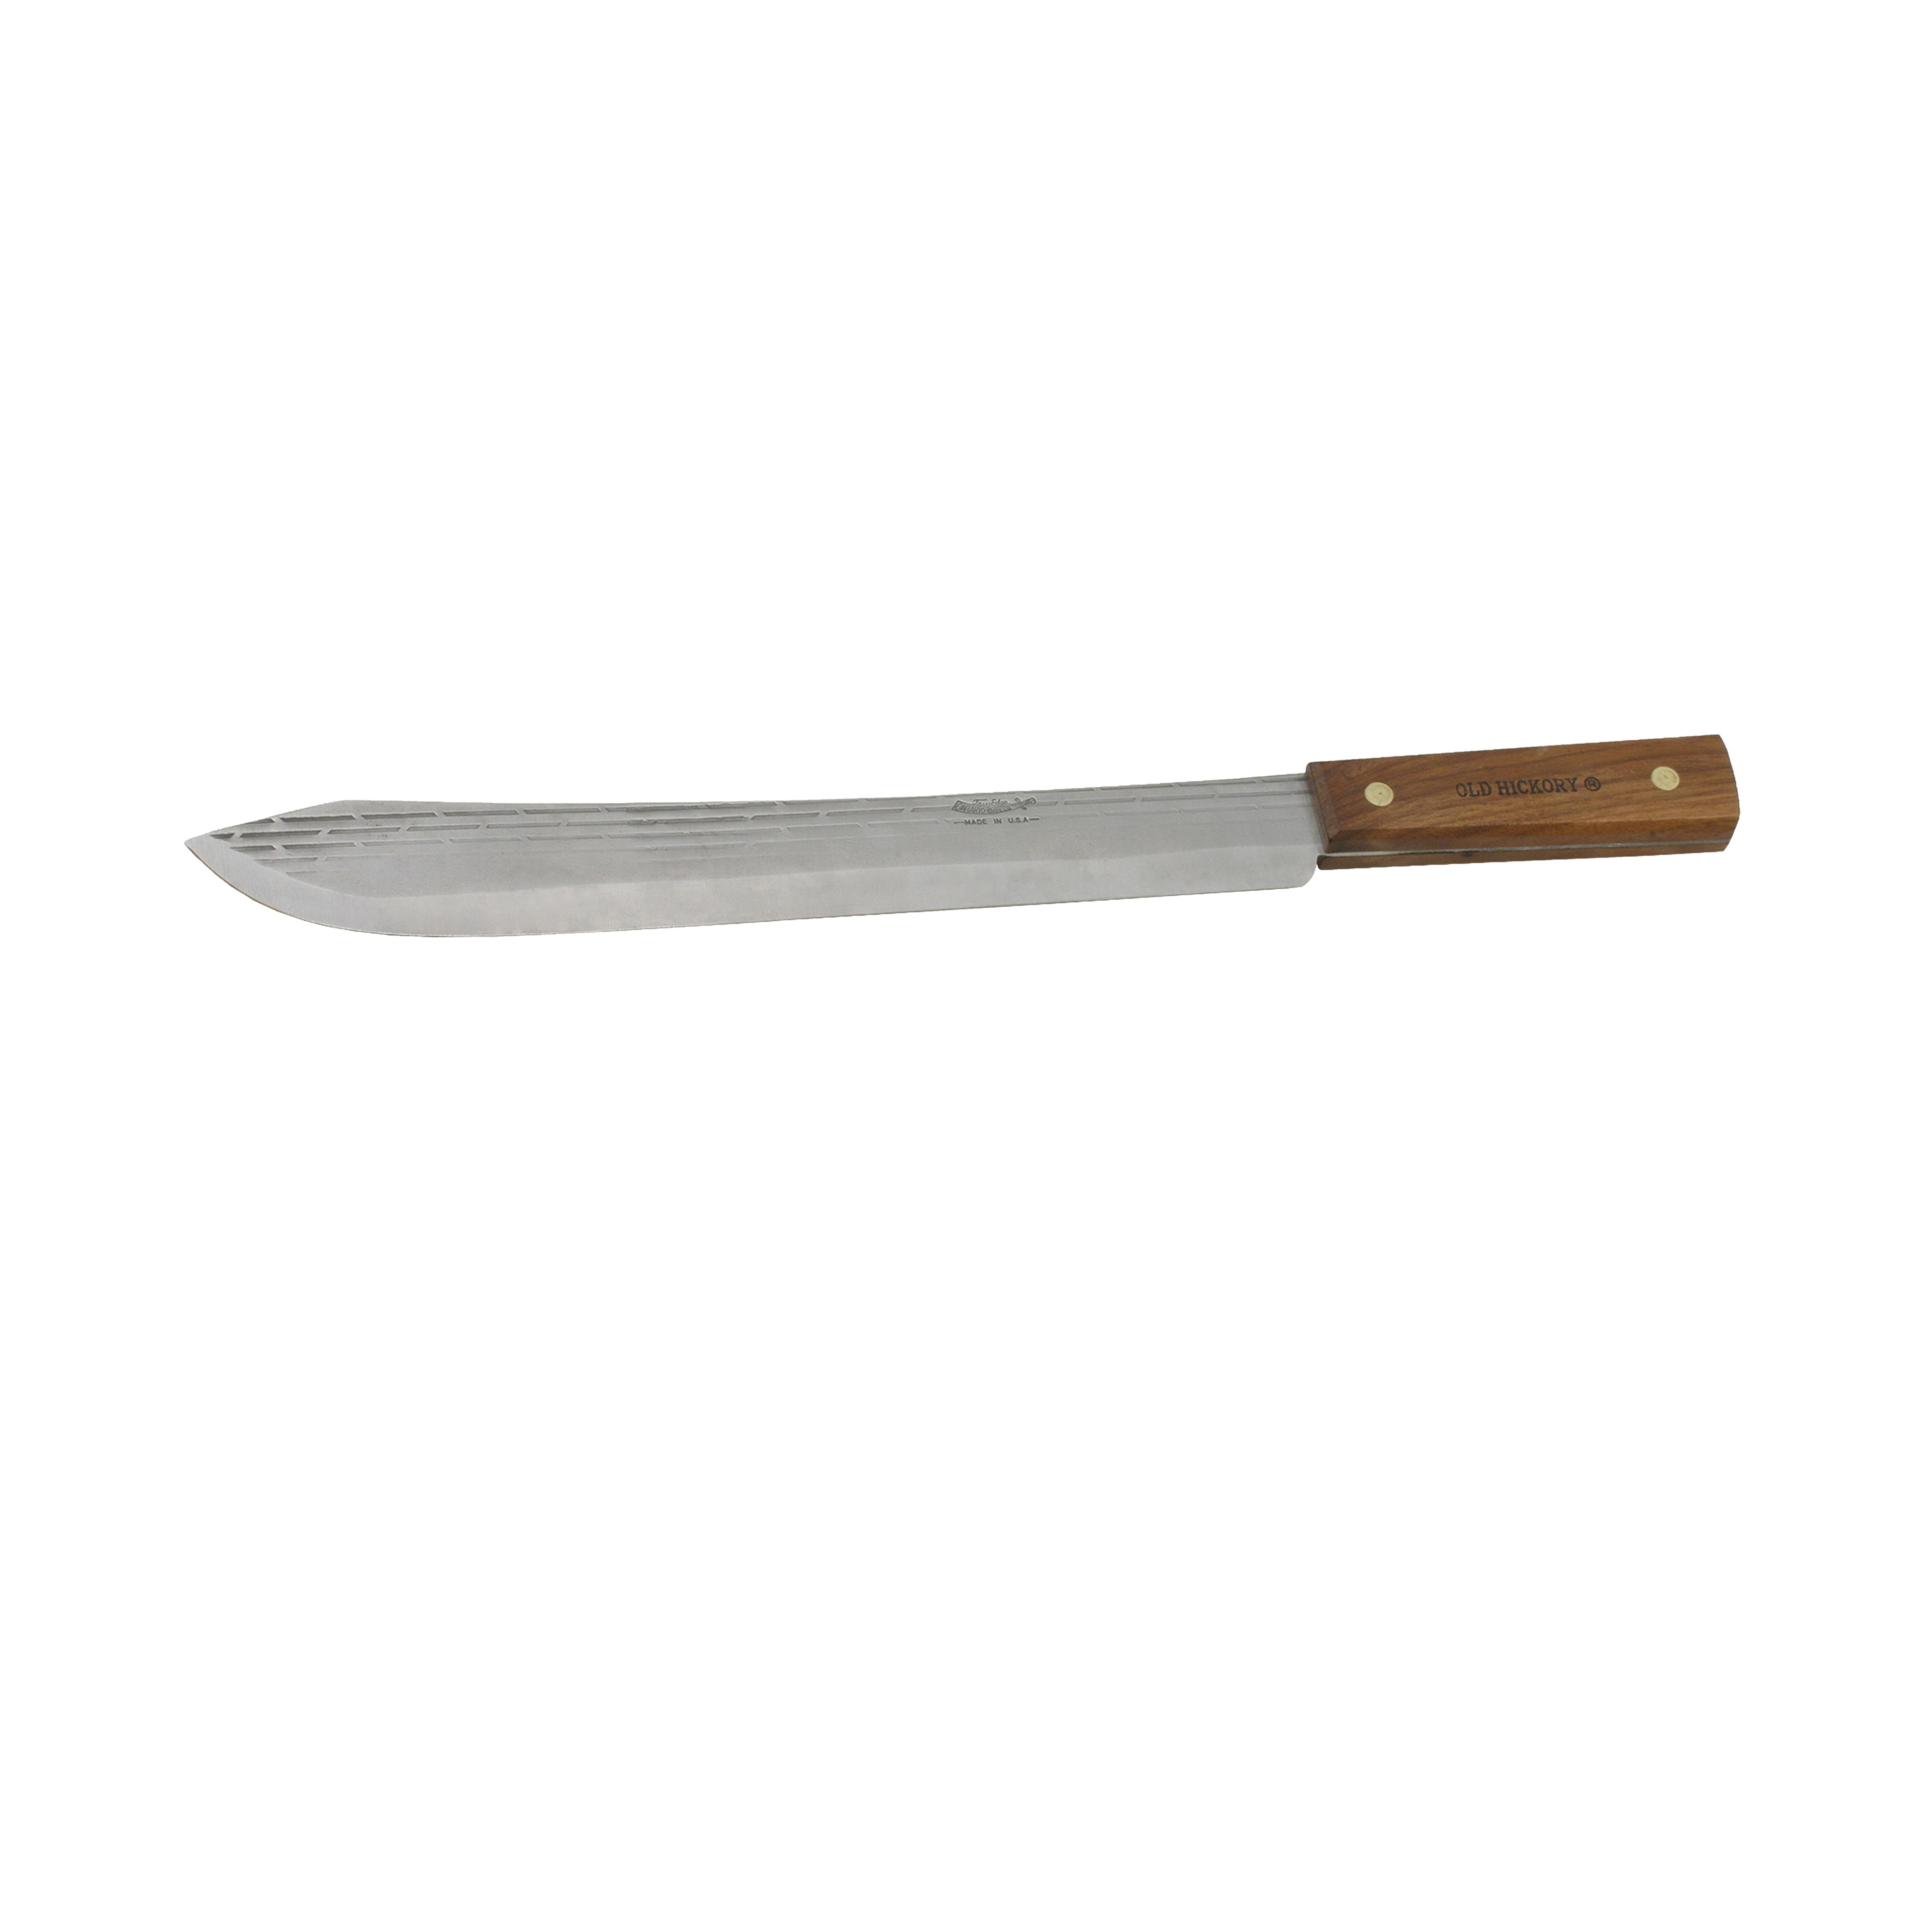 7-14 Butcher Knife, 1095 Carbon Steel Blade, Hardwood Handle, Brown Handle